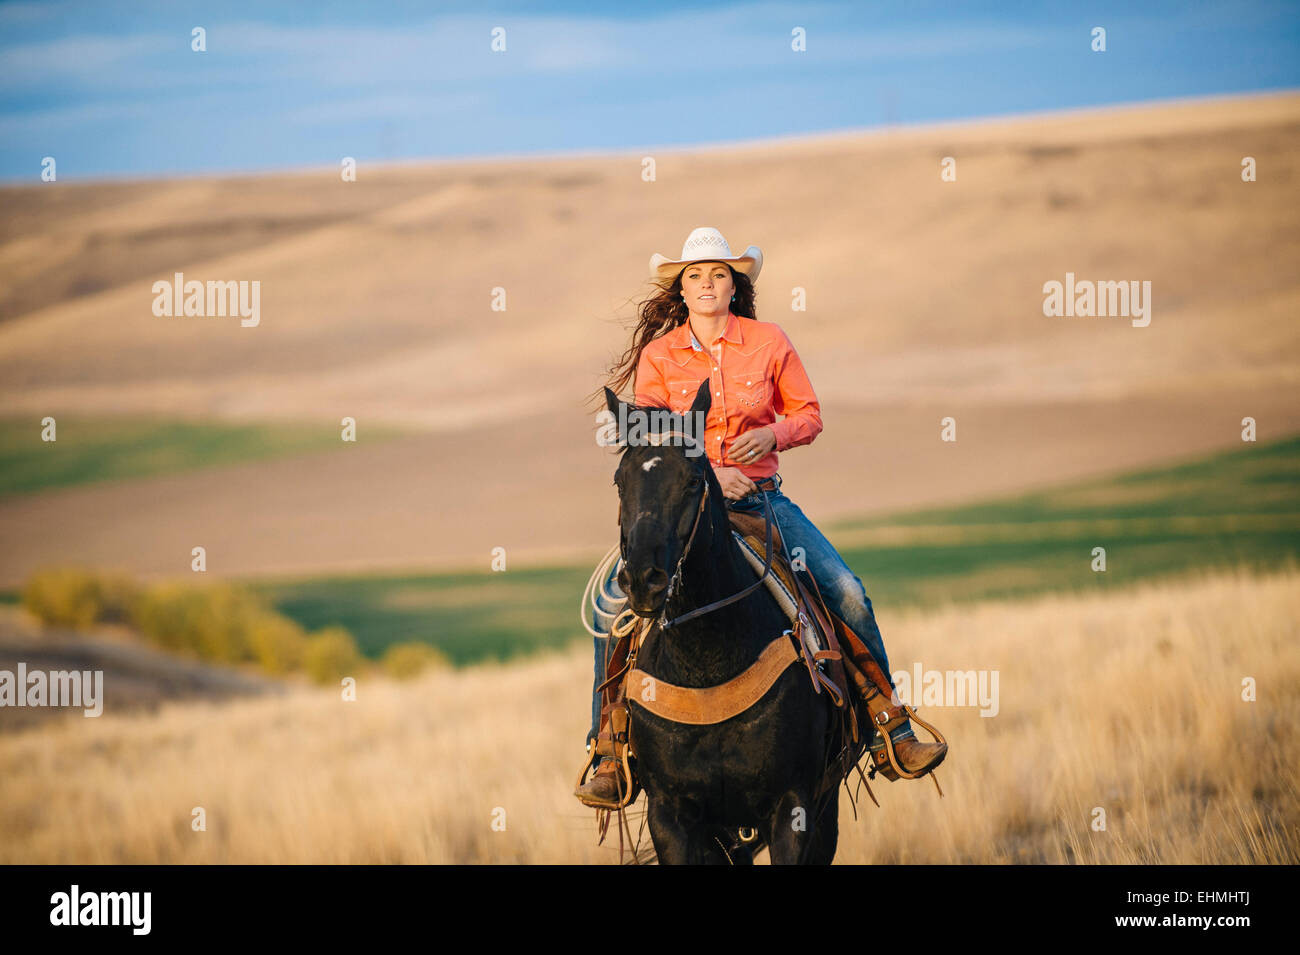 Caucasian woman riding horse in grassy field Stock Photo